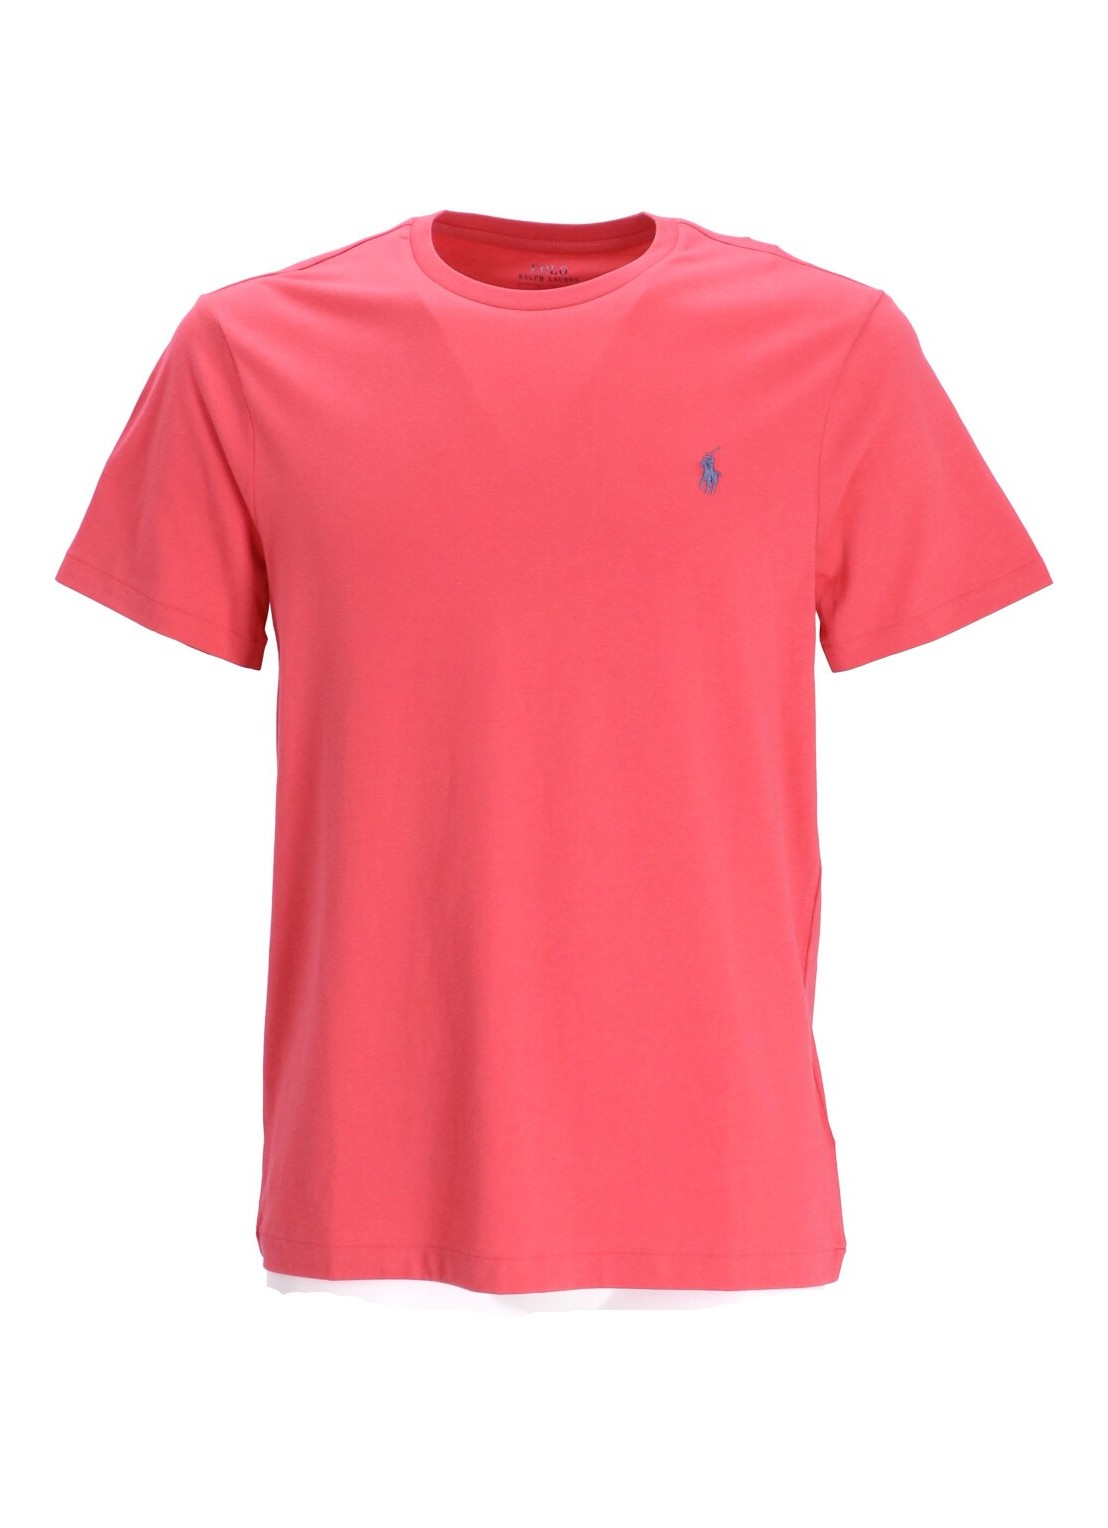 Camiseta polo ralph lauren t-shirt man sscncmslm2-short sleeve-t-shirt 710671438321 red sky talla ro